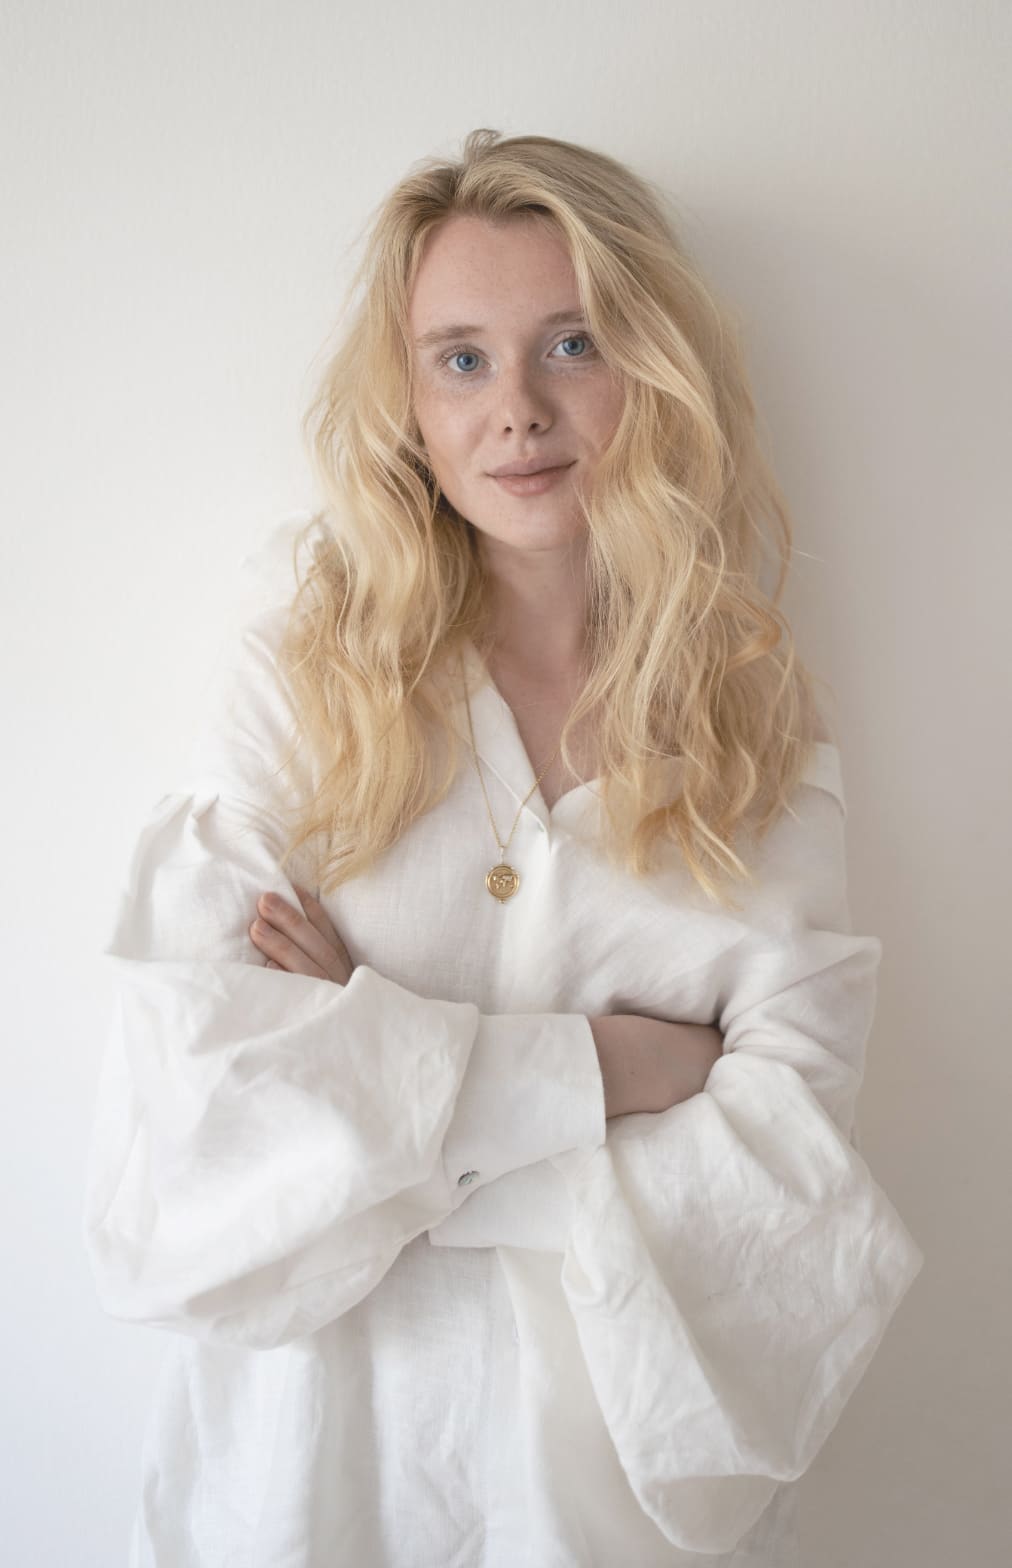 Blonde woman wearing a white shirt